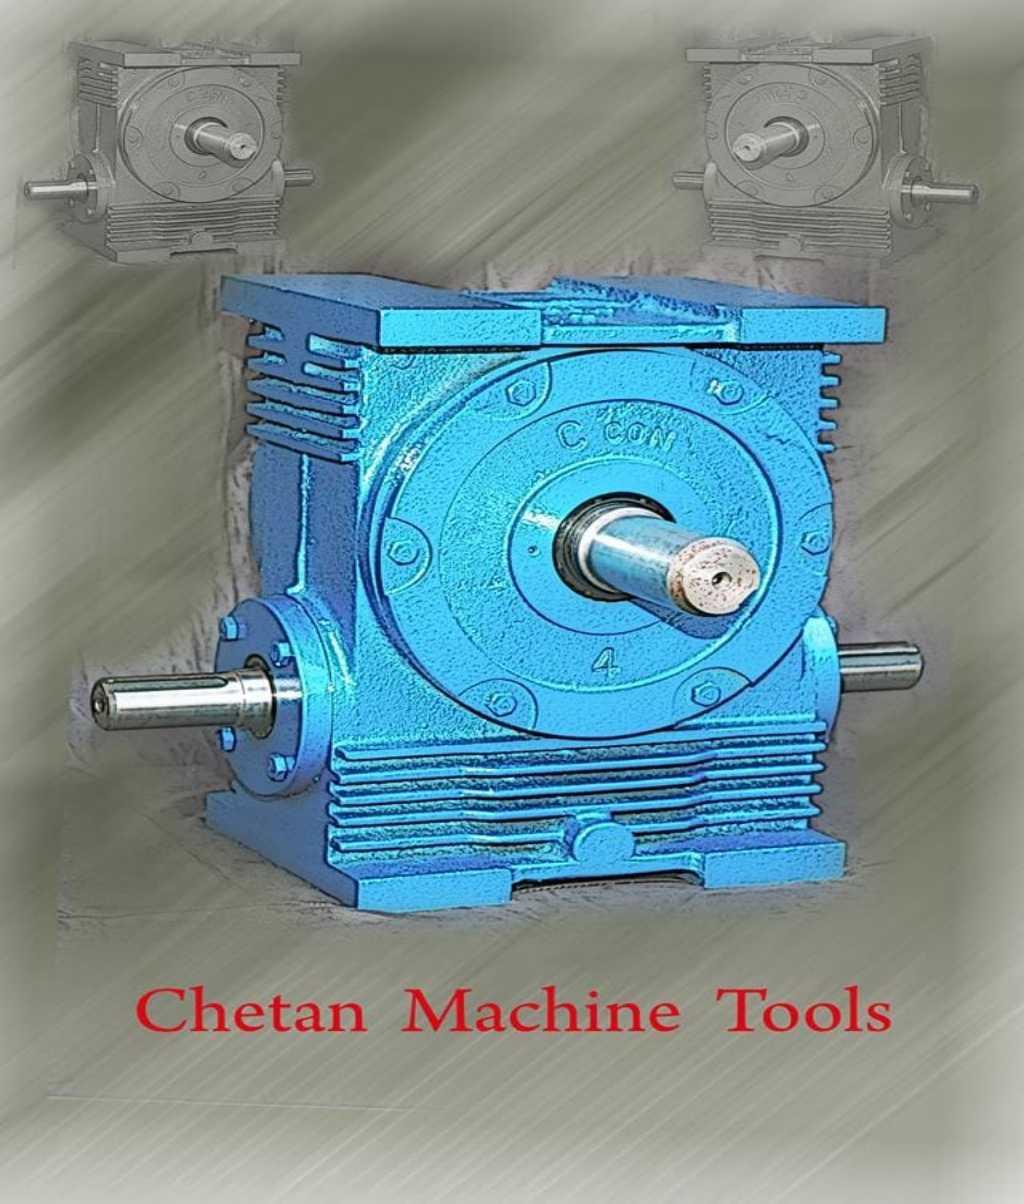 Chetan Machine Tools